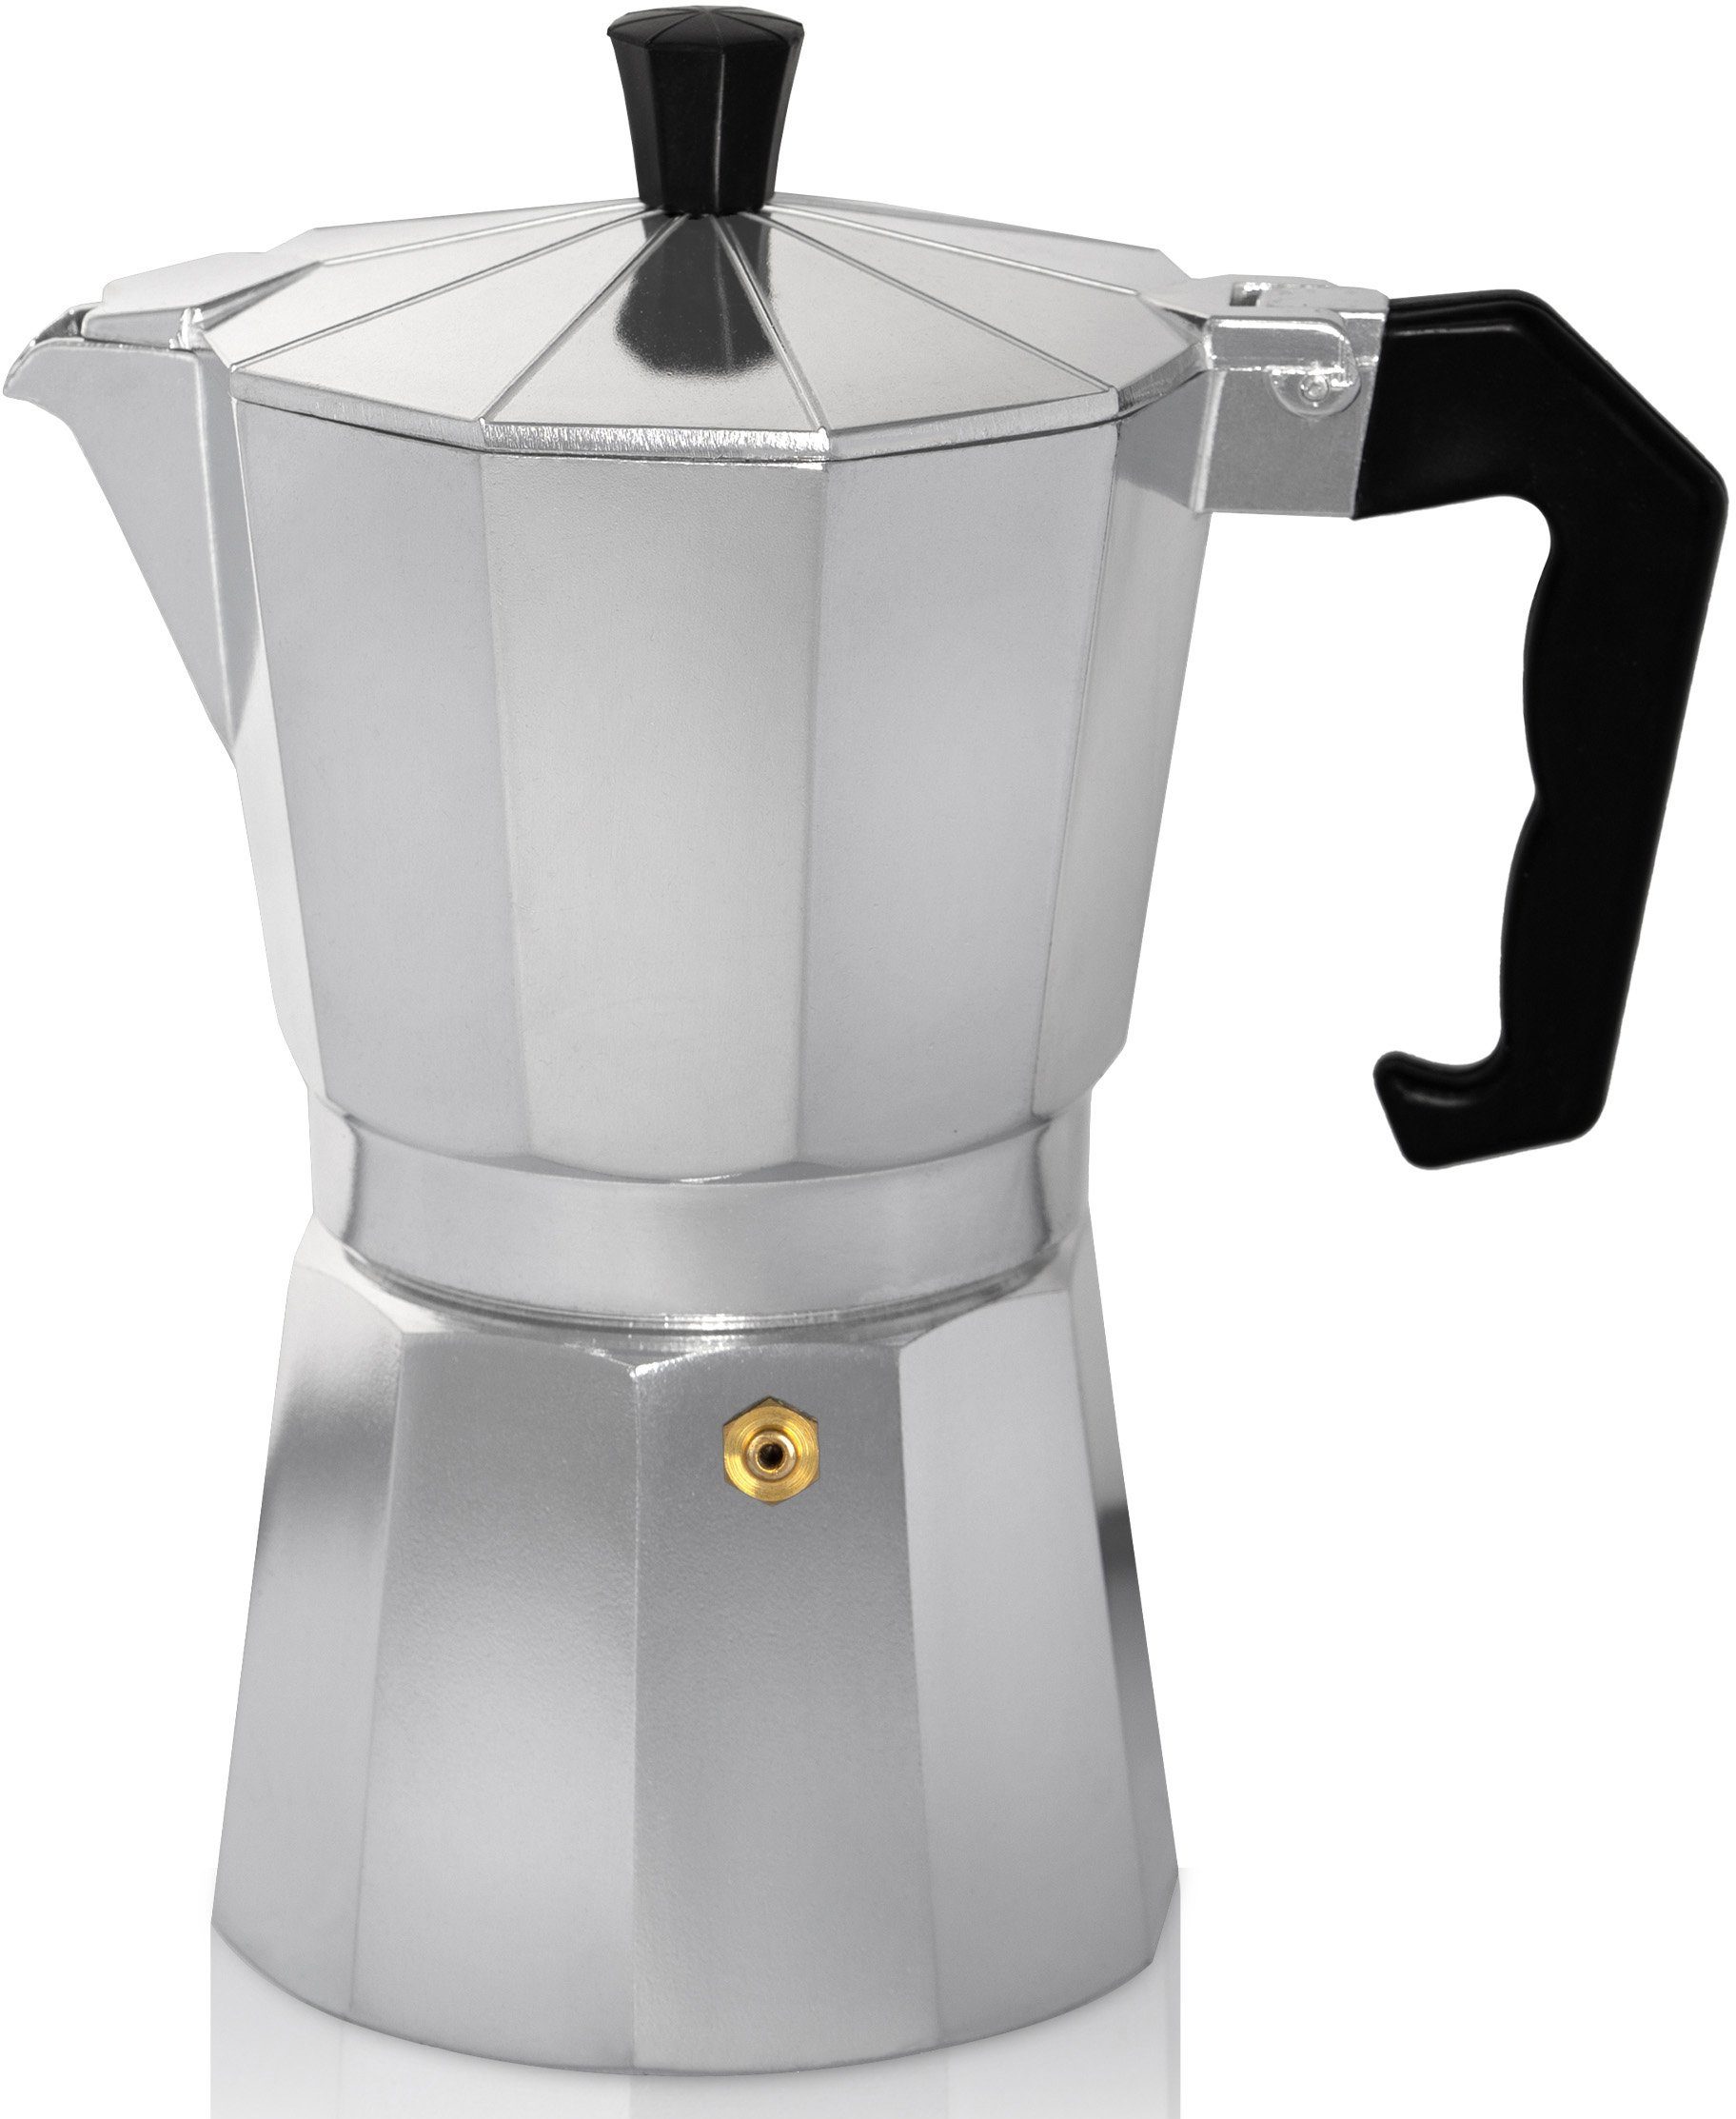 Krüger Espressokocher Italiano, 0,2l Kaffeekanne, traditionell italienisch, aus Aluminium, mit Silikon-Dichtungsring